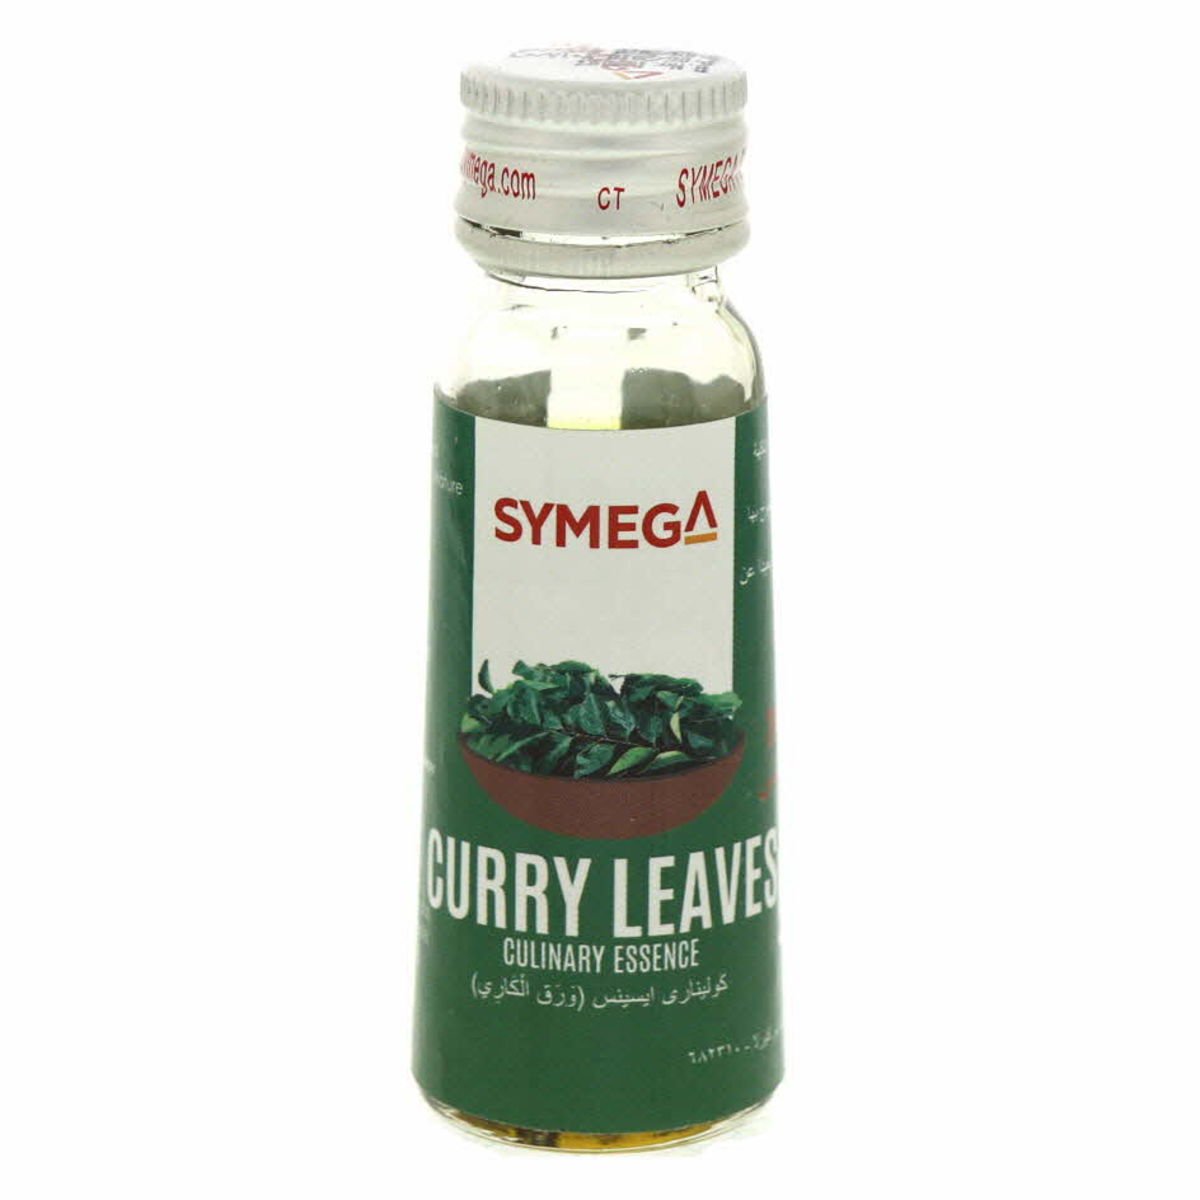 Symega Curry Leaves Culinary Essence 20 ml